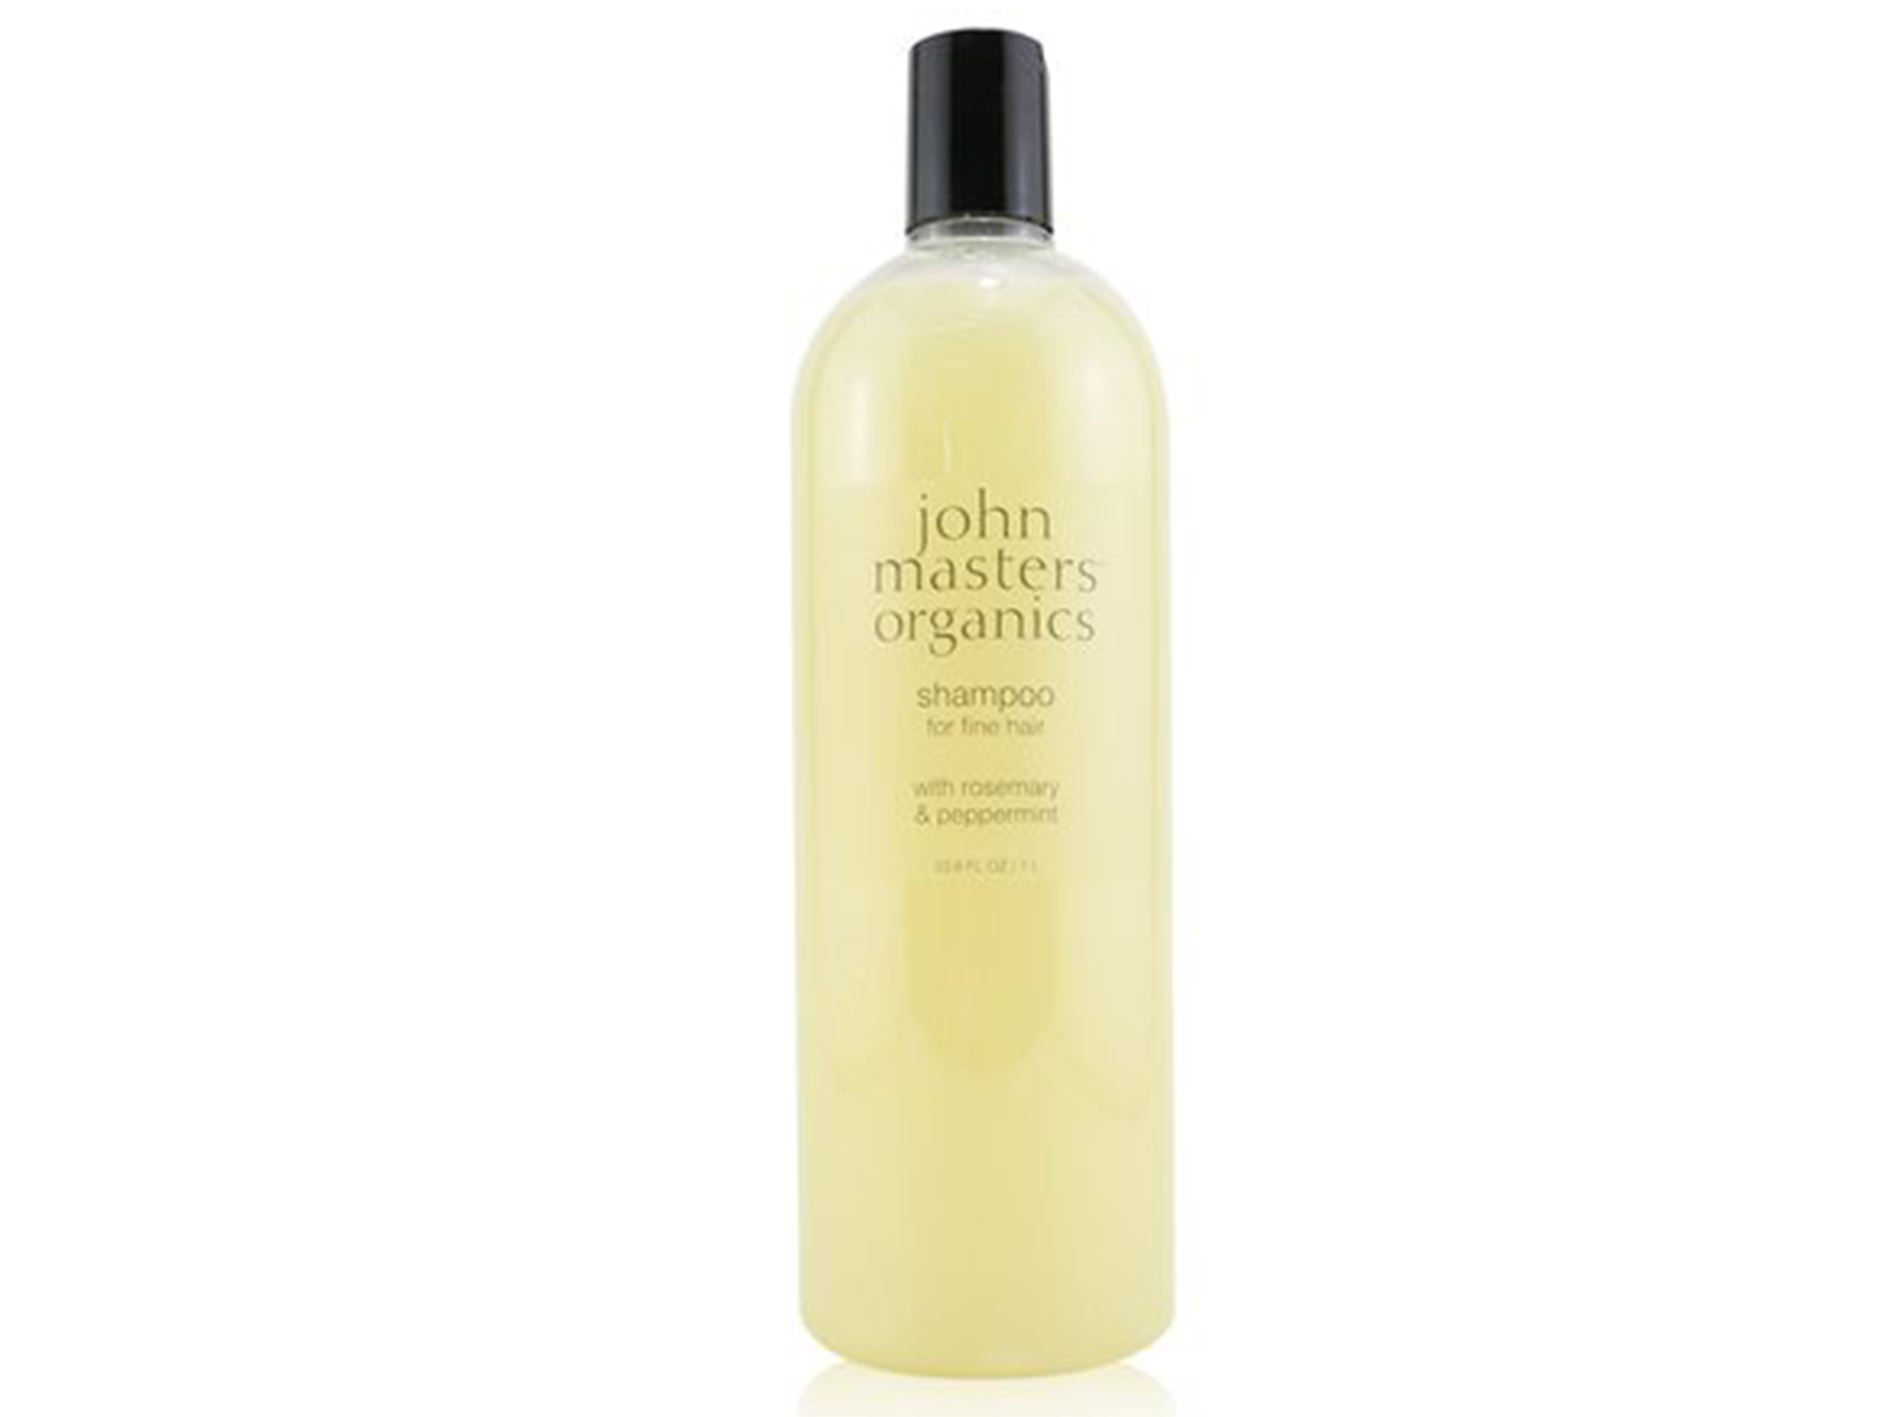 JOHN MASTERS ORGANICS 有機大師約翰 迷迭香和薄荷洗髮露 | Shampoo For Fine Hair with Rosemary & Peppermint 1000ml